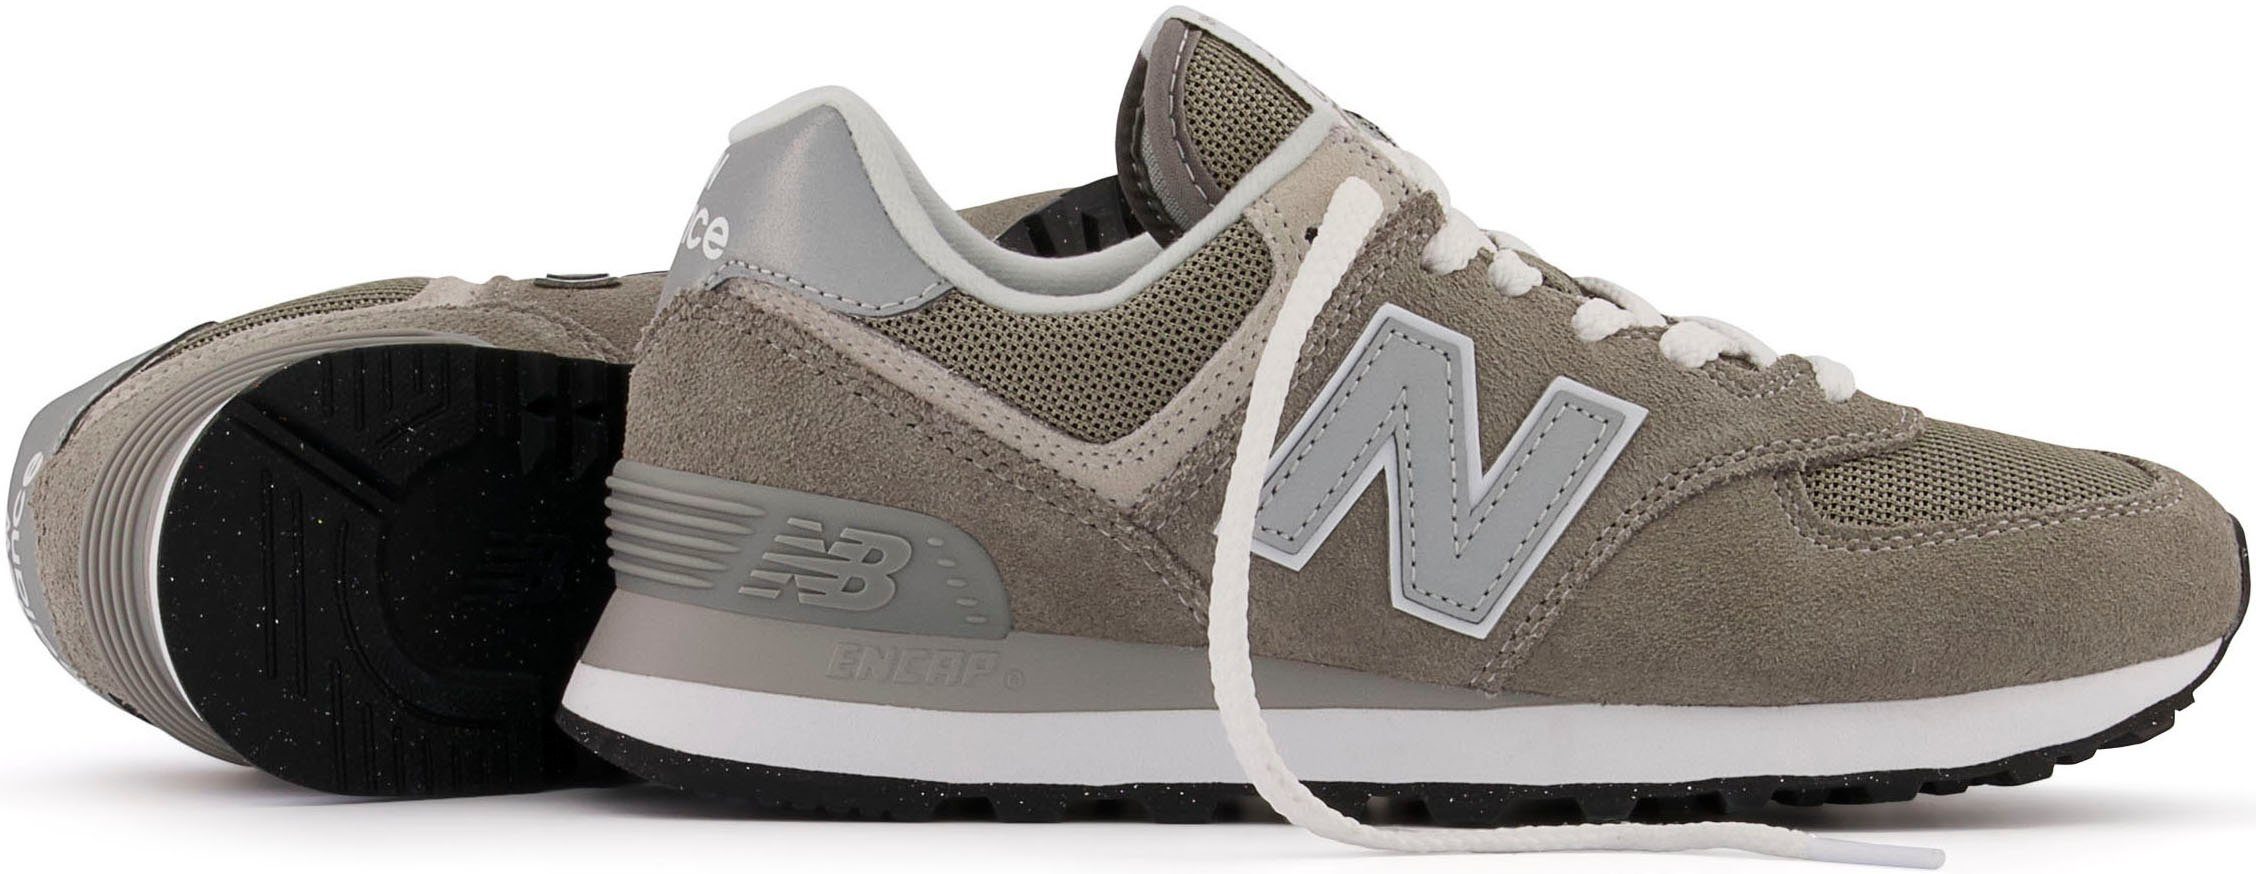 Sneaker New WL574 Core Balance dunkelgrau-grau-weiß